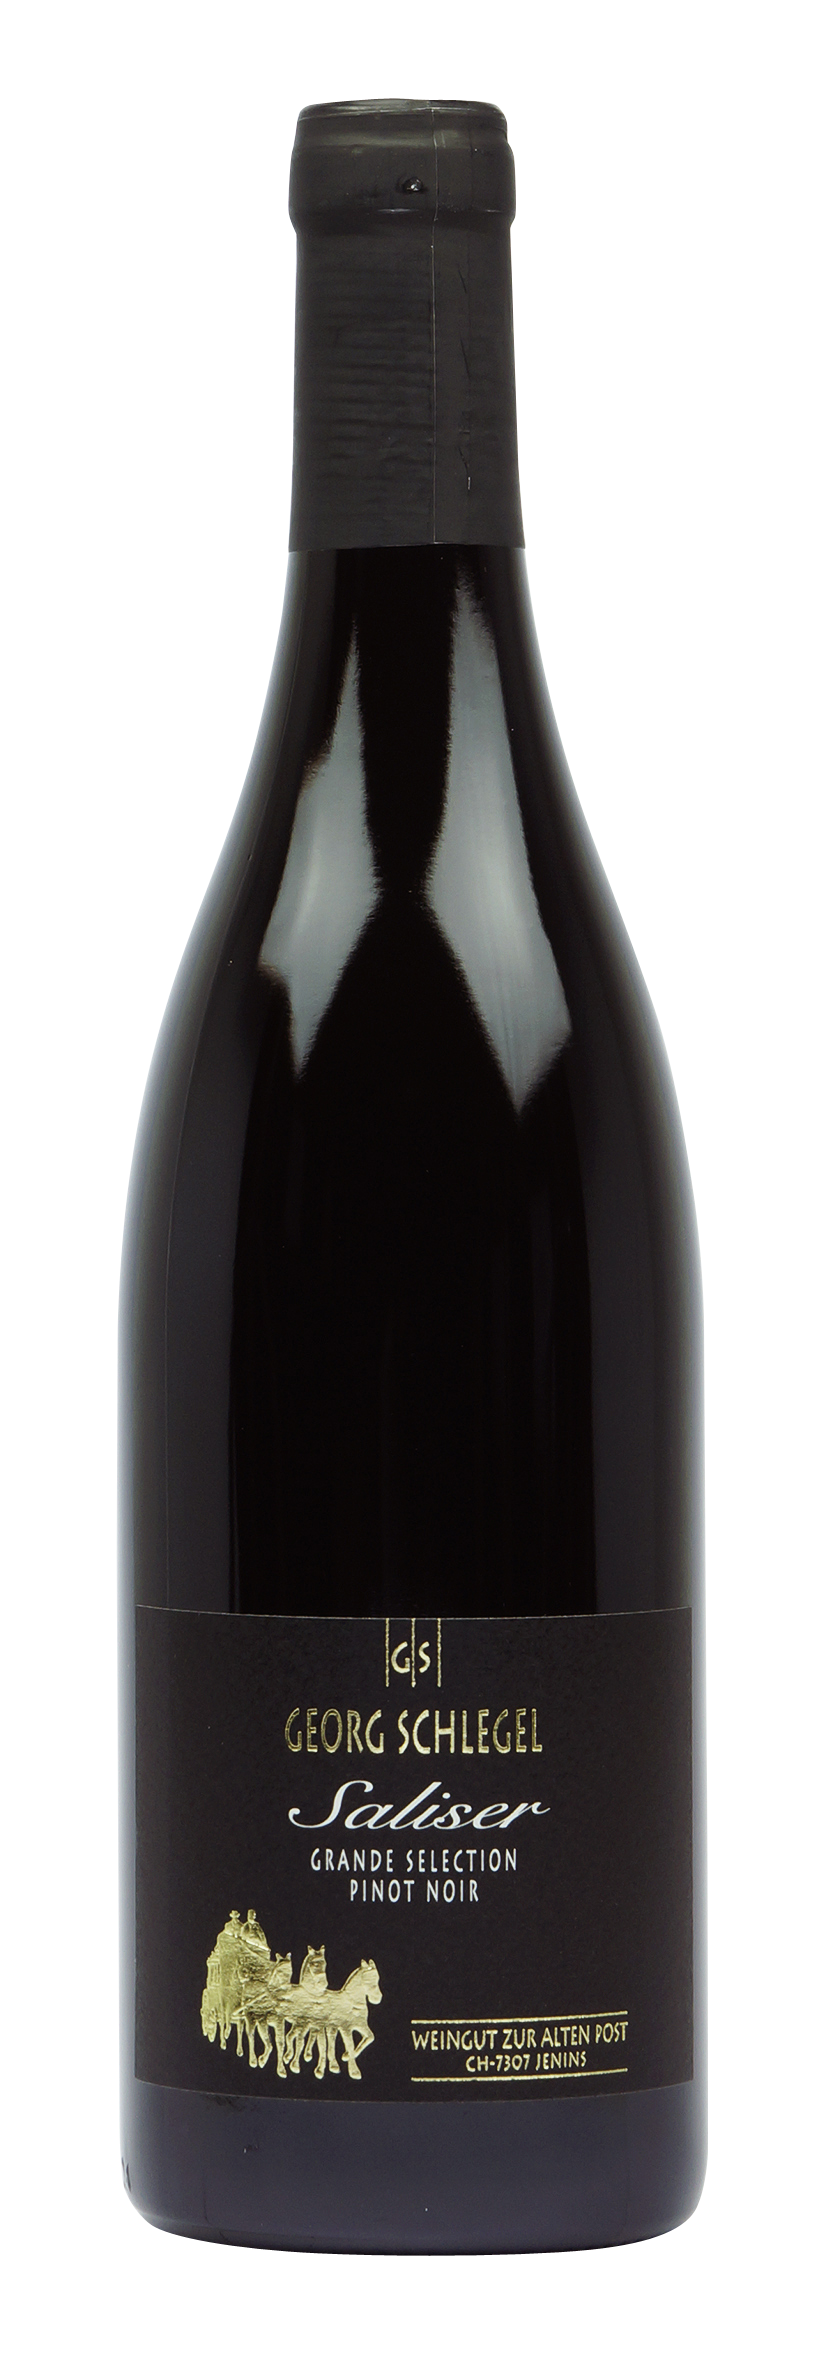 Graubünden AOC Pinot Noir Saliser Grande Selection 2015